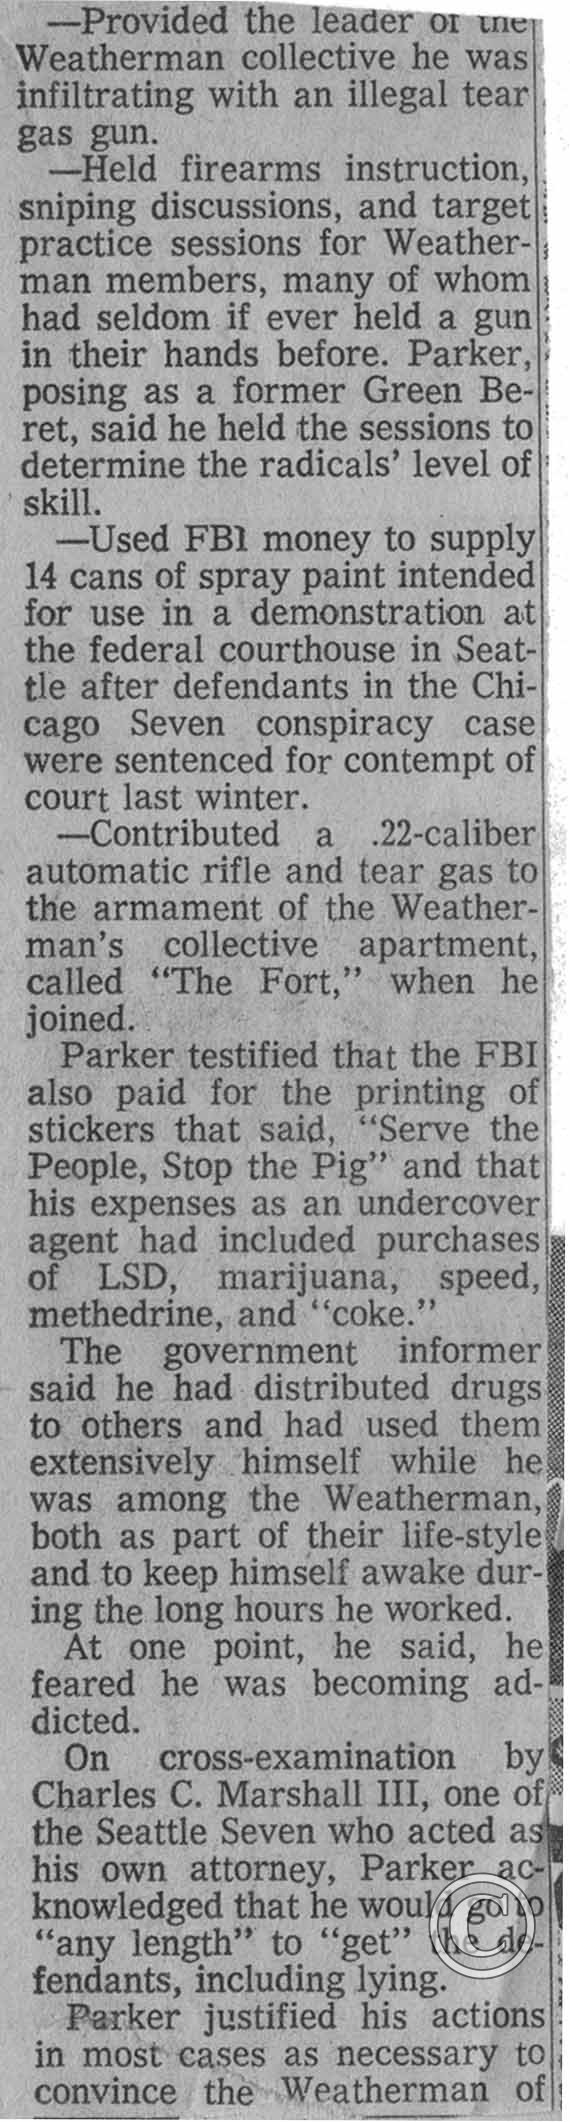 FBI Informer Airs Secrets Learned While Posing As Fellow Weatherman, 12/21/70 pt. 2